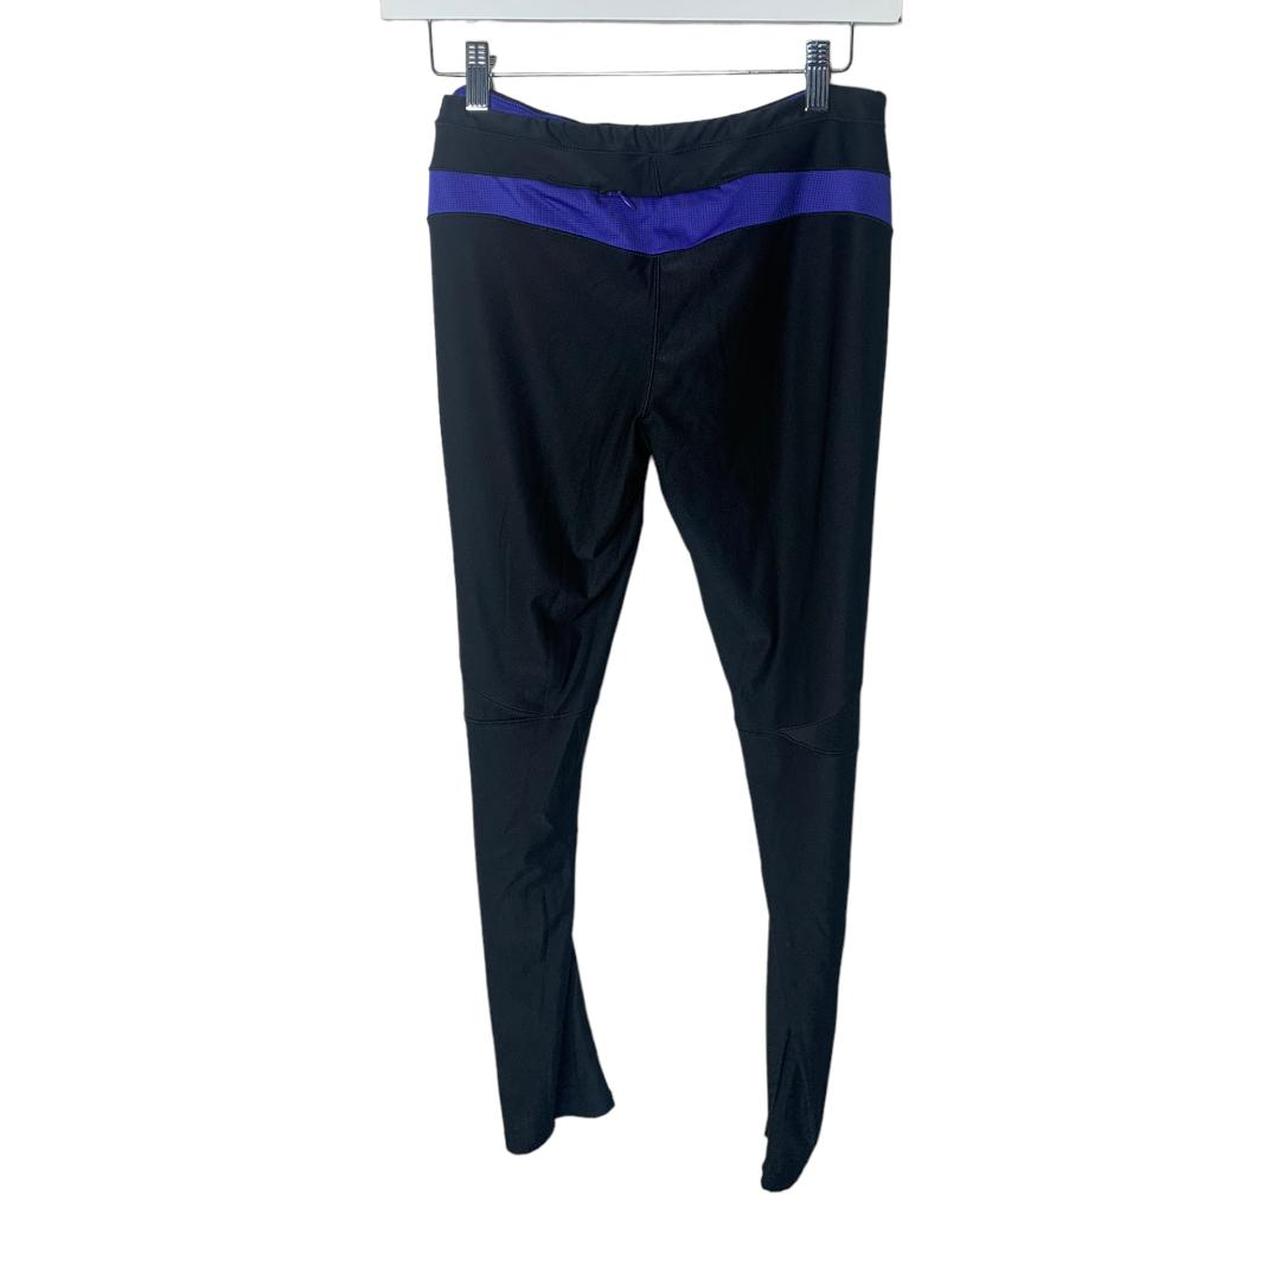 Avia black blue athletic leggings Medium breathable - Depop